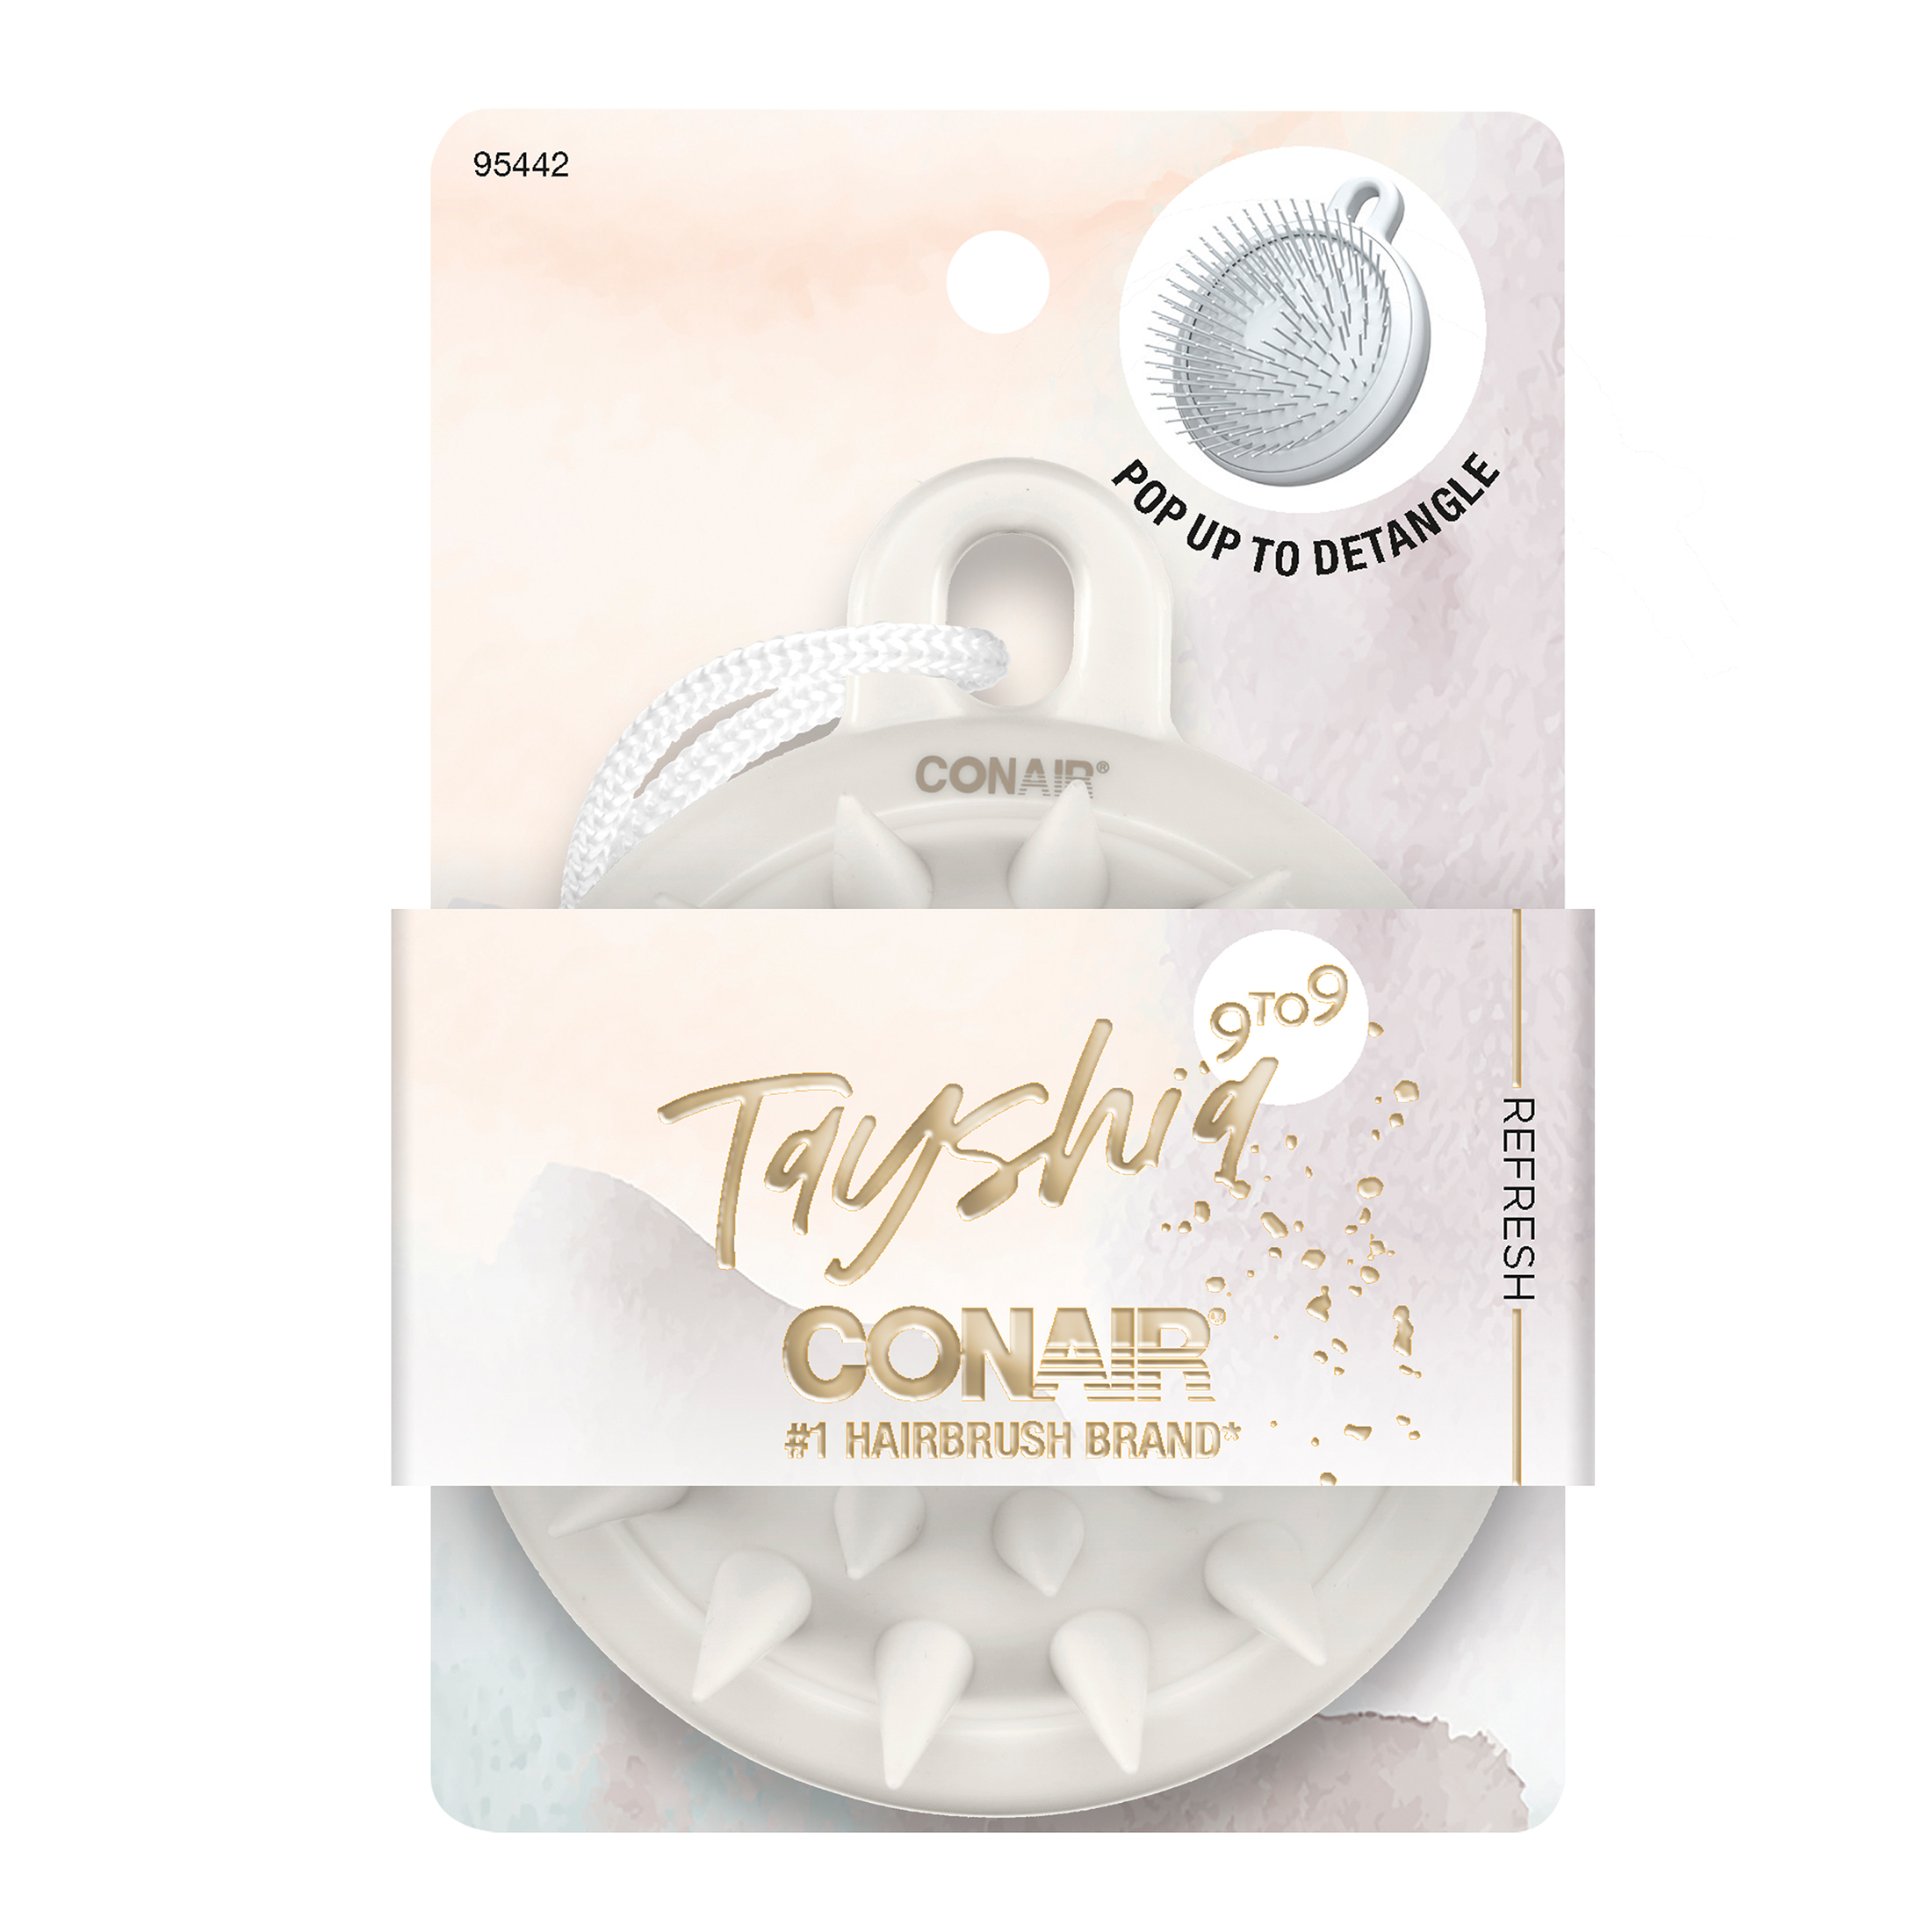 Tayshia by Conair 2-in-1 Pop-up Dual Shower Detangling Hair Brush, Gray - image 1 of 11